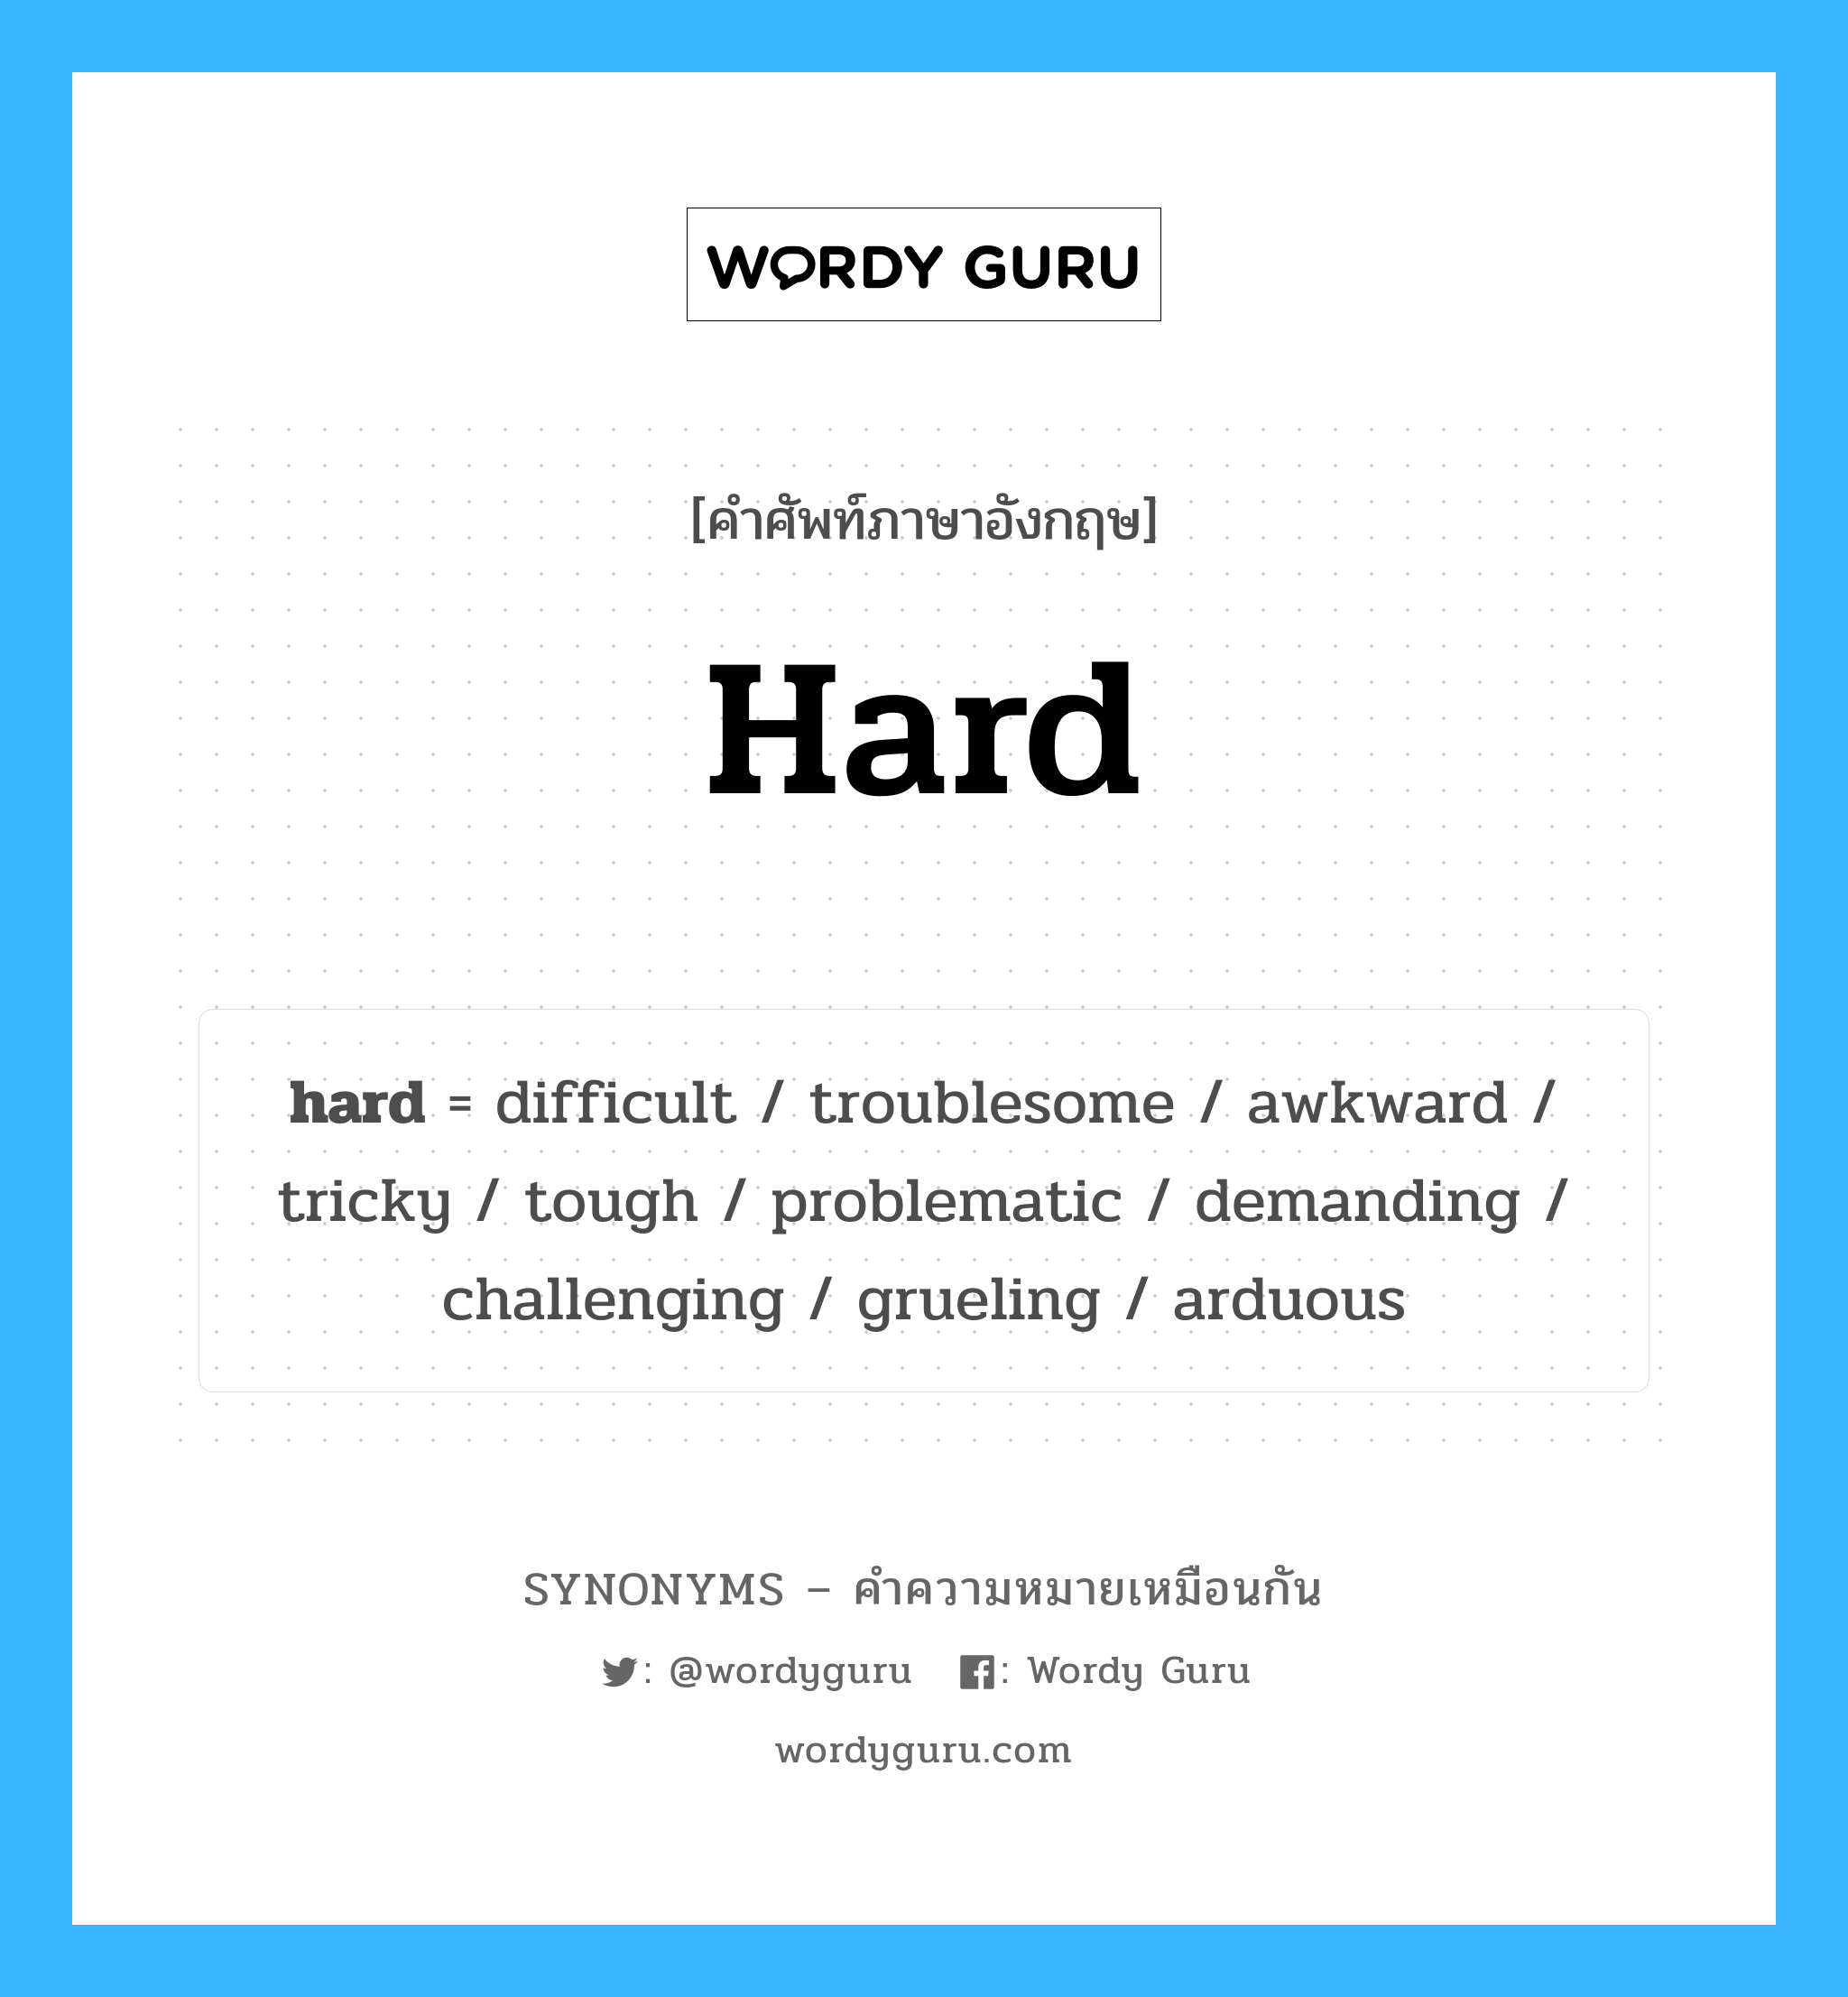 problematic เป็นหนึ่งใน hard และมีคำอื่น ๆ อีกดังนี้, คำศัพท์ภาษาอังกฤษ problematic ความหมายคล้ายกันกับ hard แปลว่า มีปัญหา หมวด hard